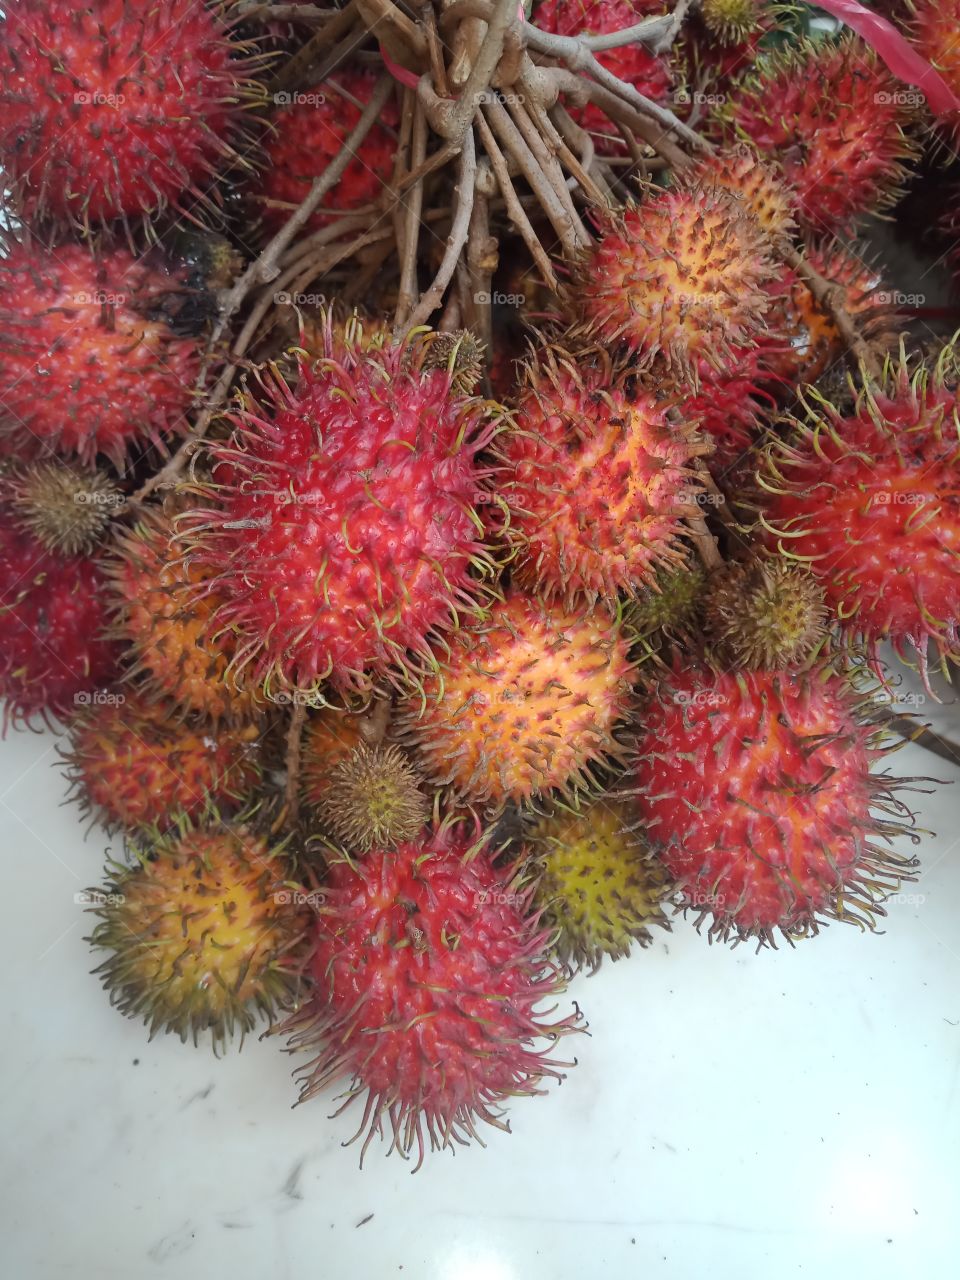 Indonesian rambutan fresh fruit